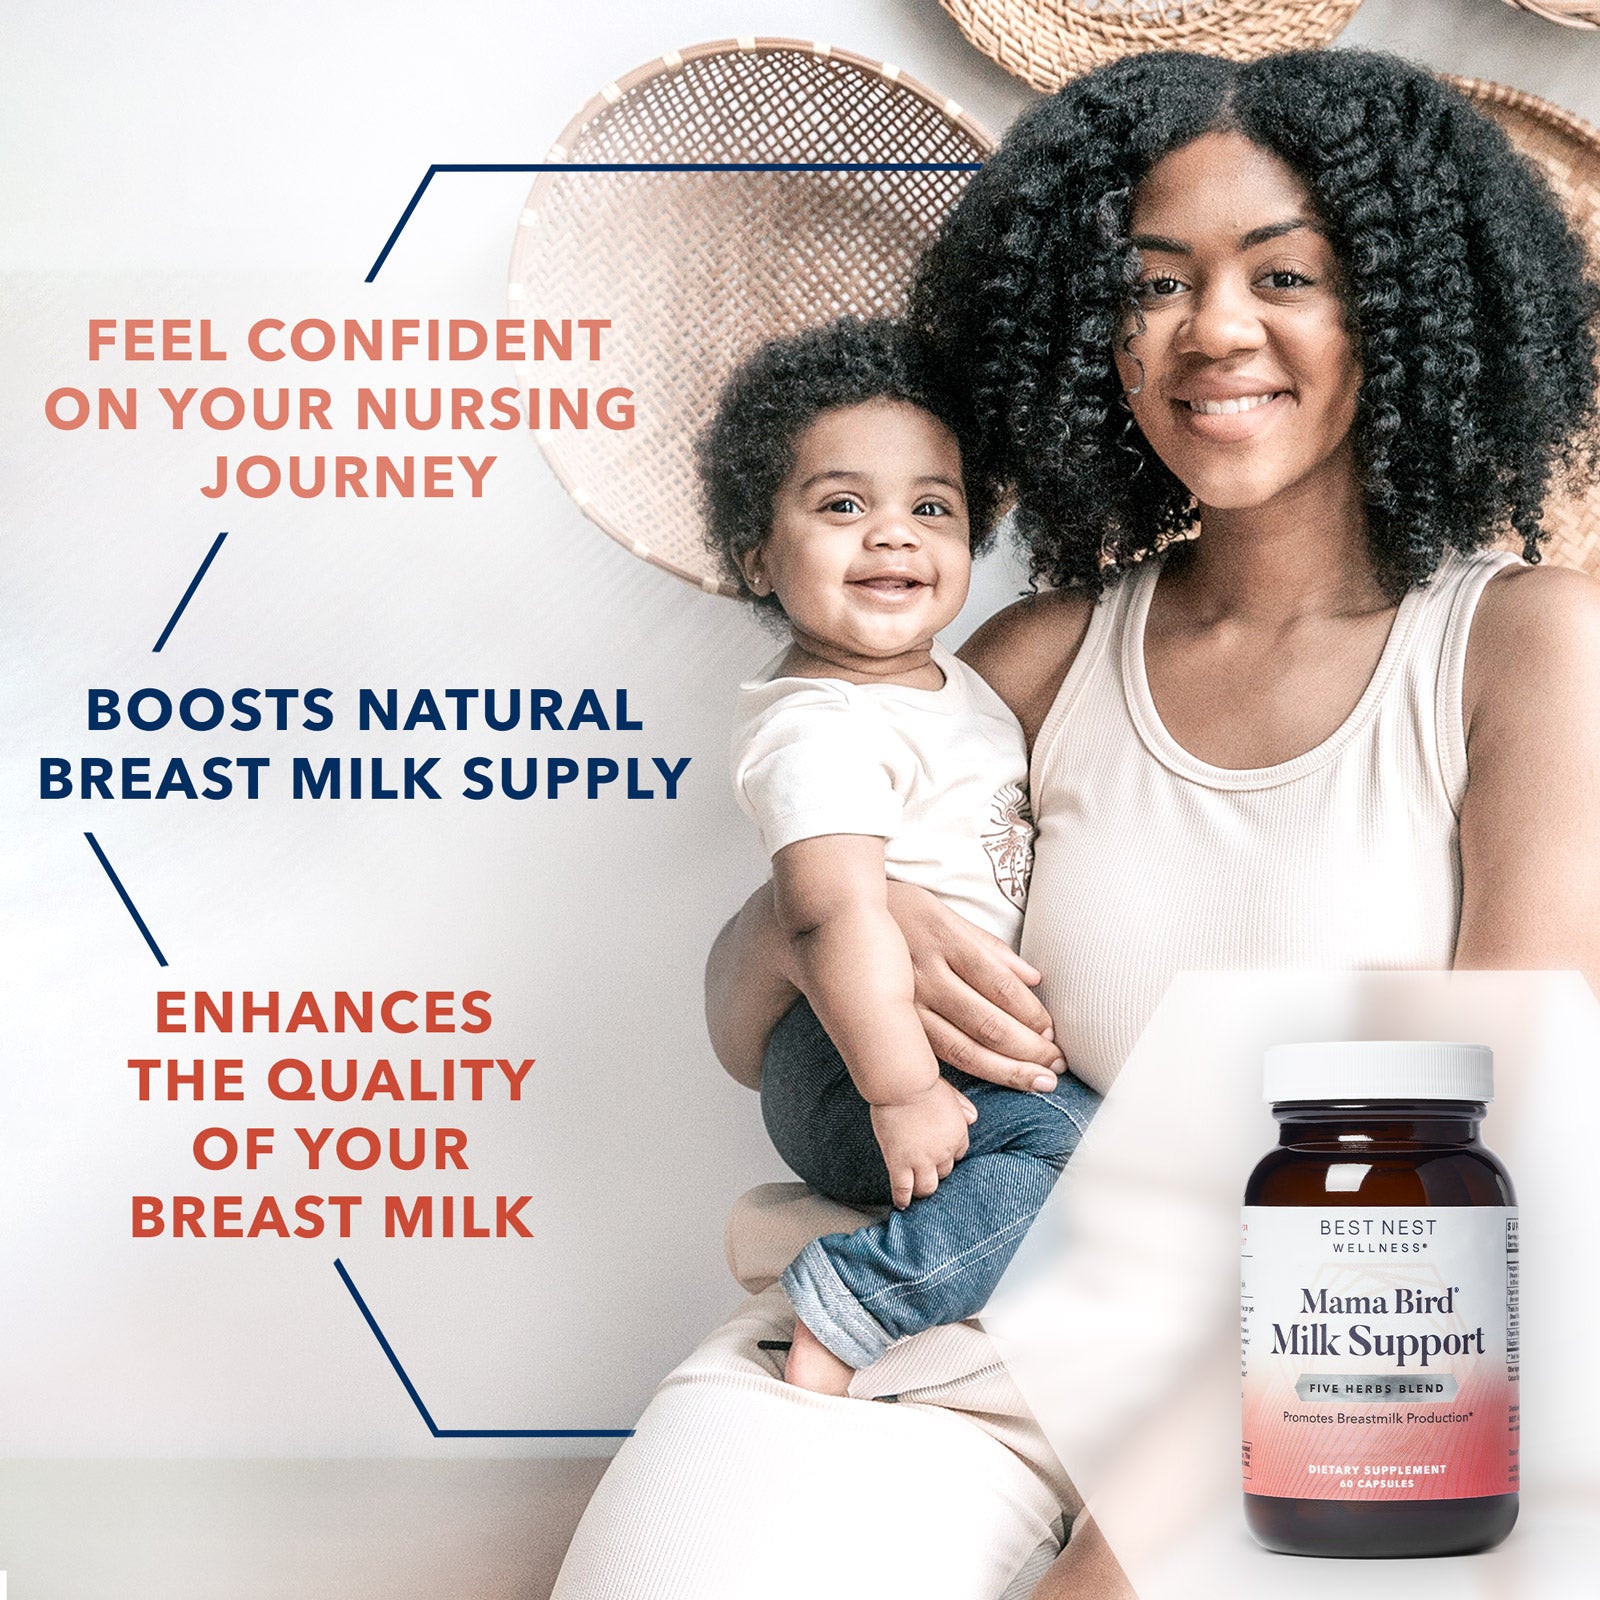 Mama Bird® Milk Support